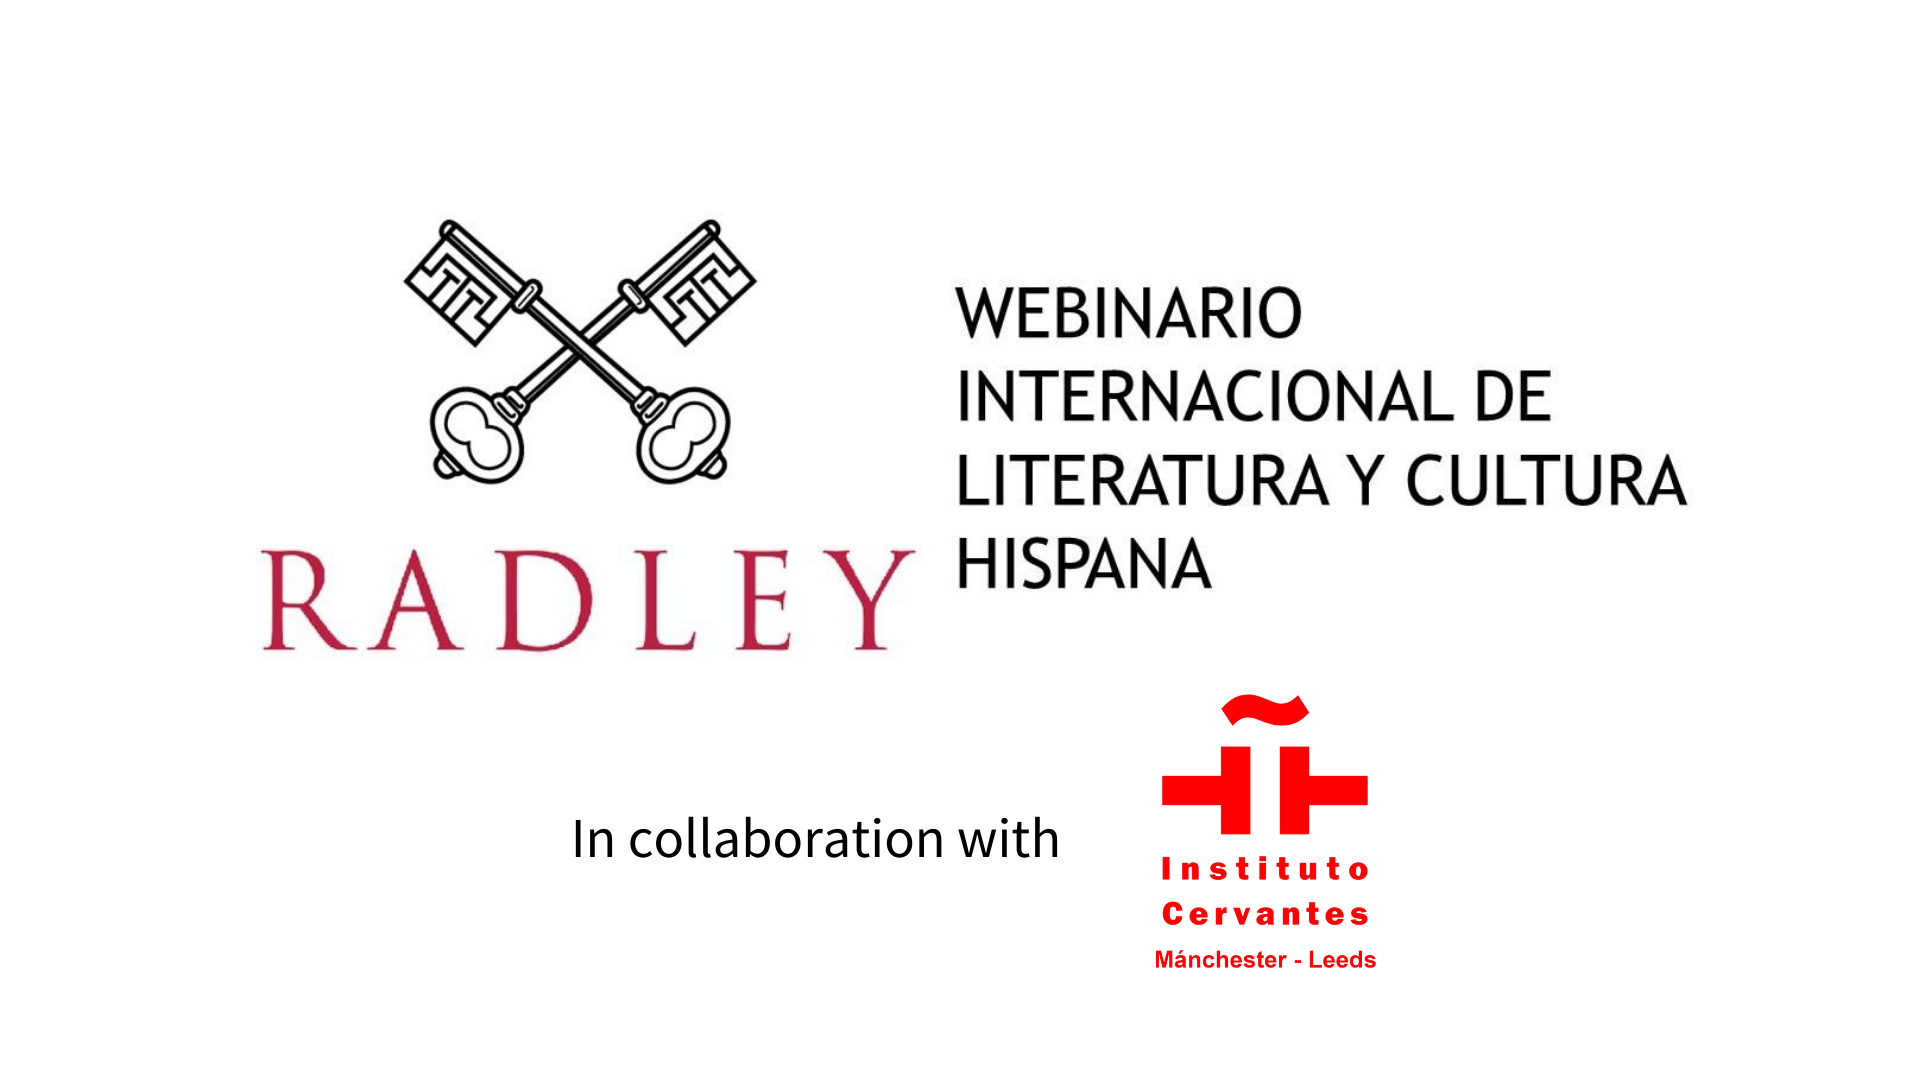 International Webinar of Hispanic Literature and Culture